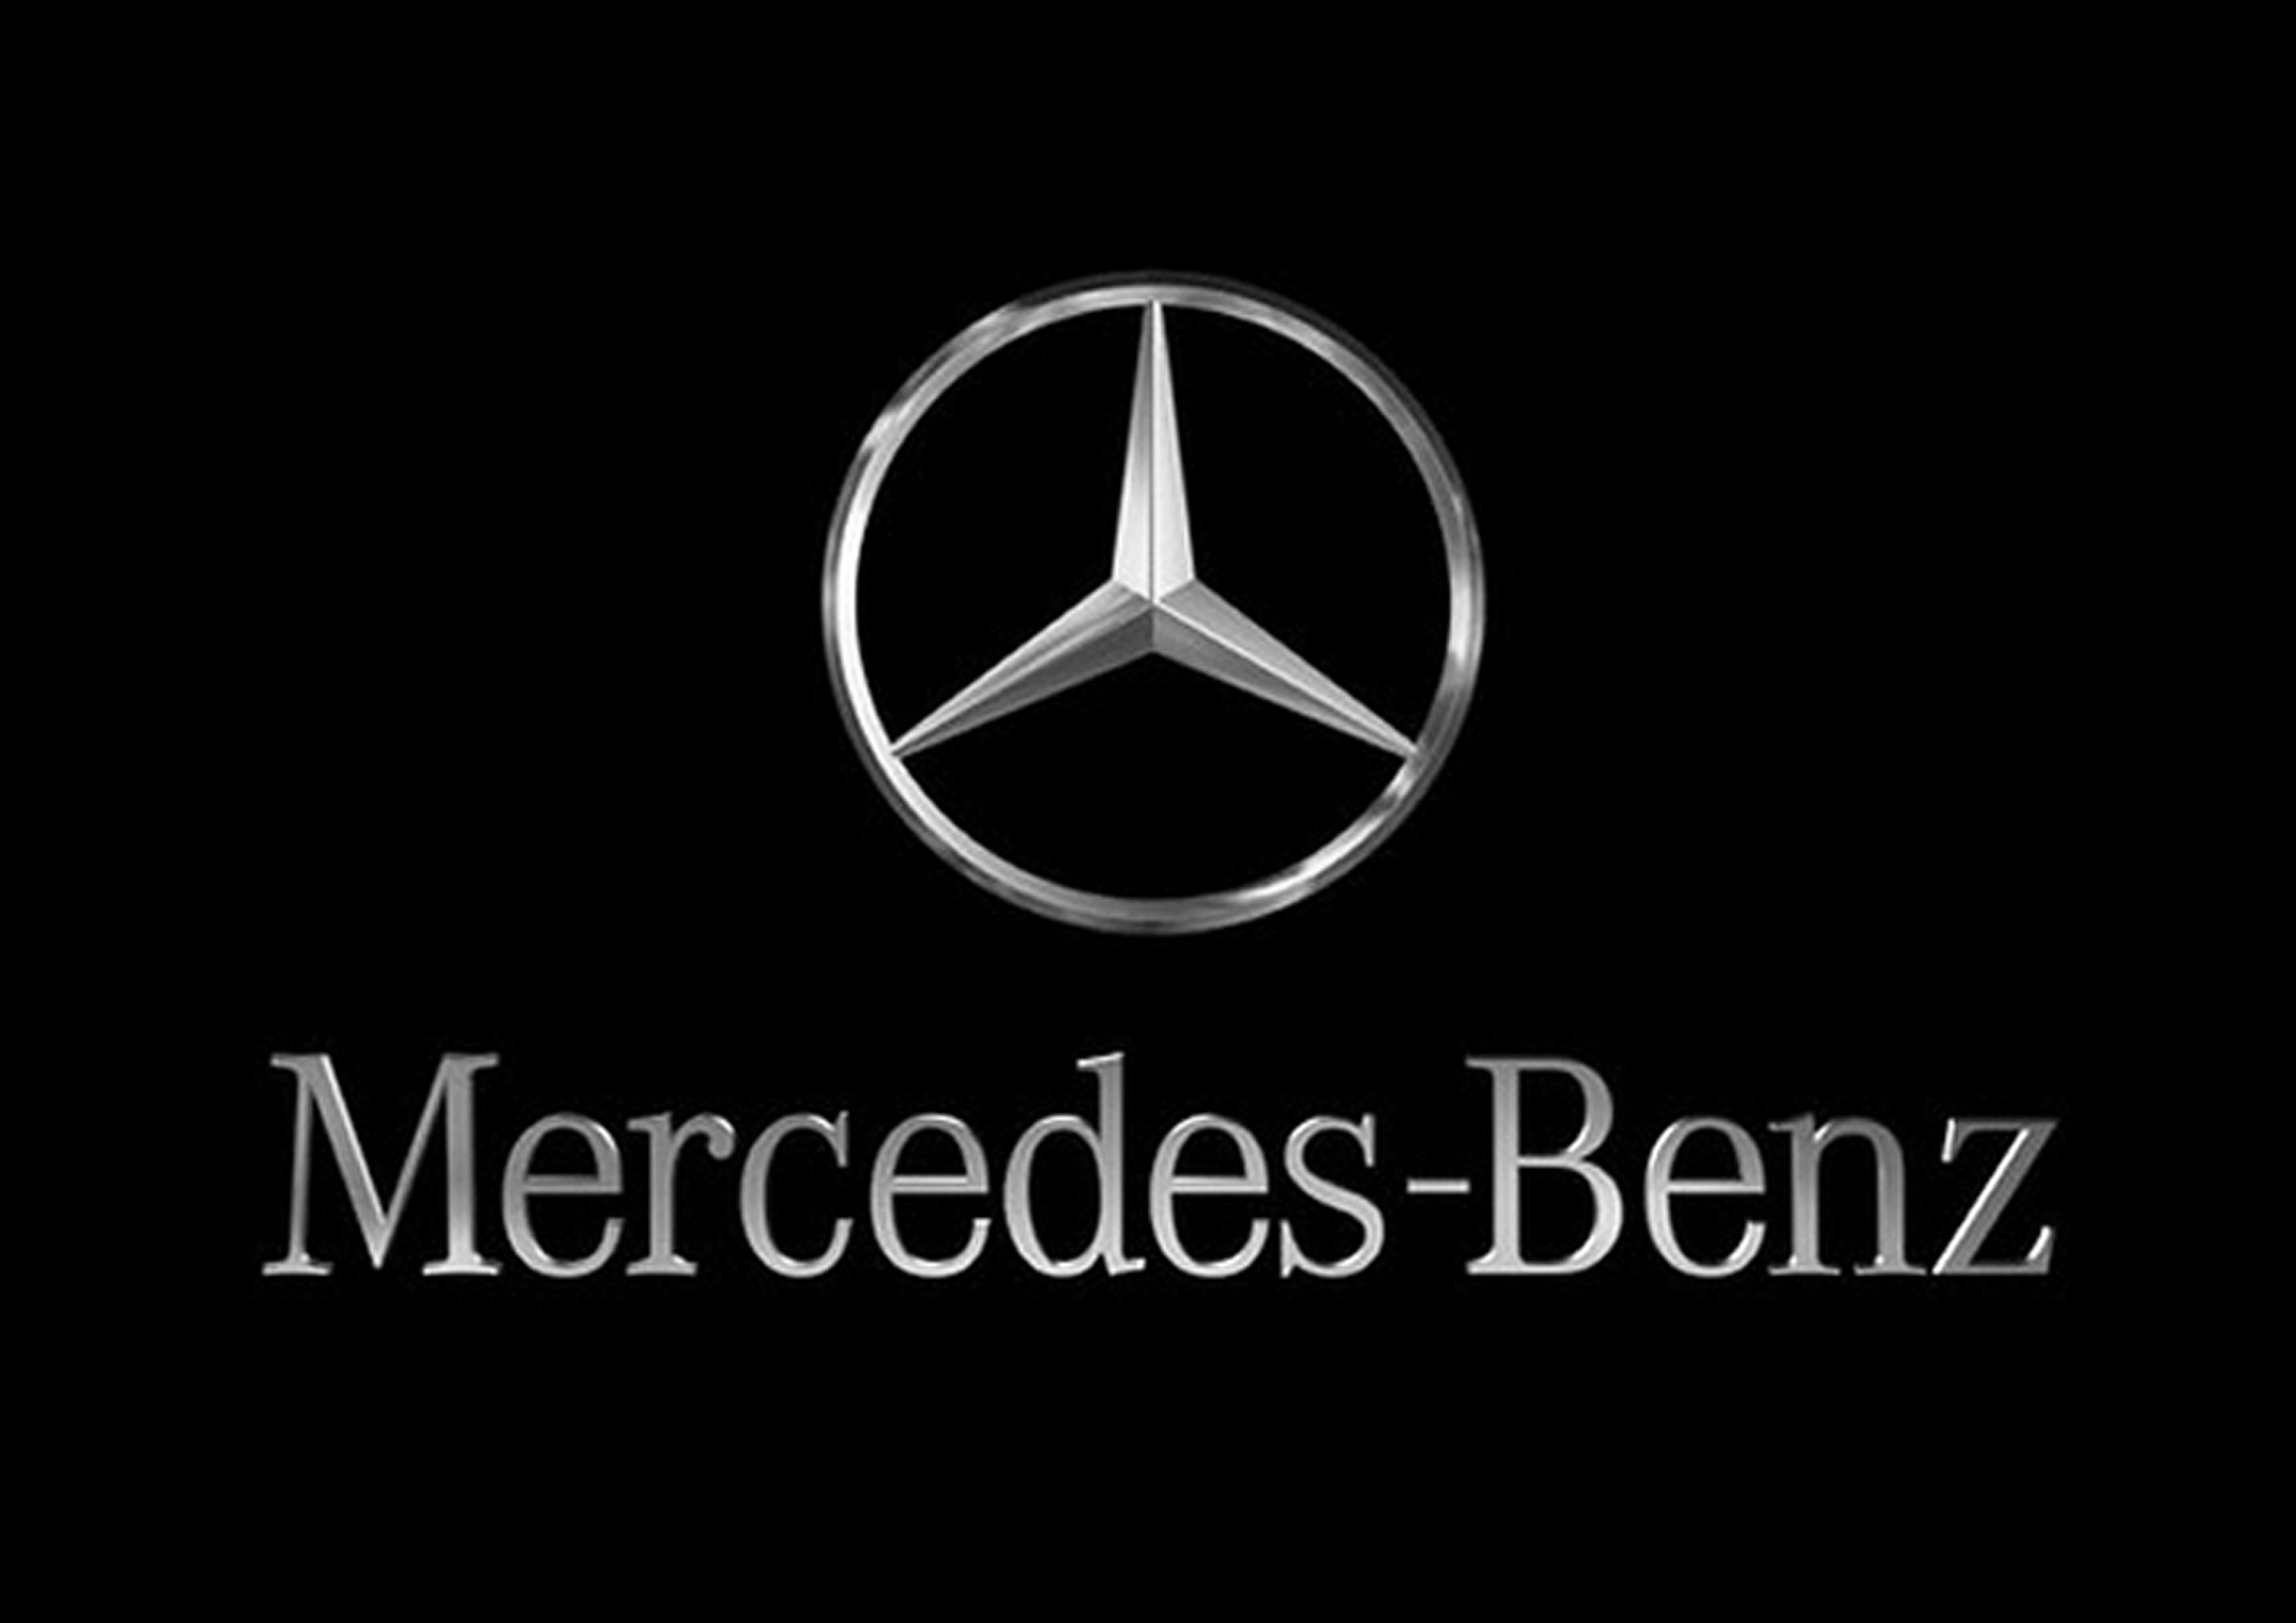 Mercedes Benz Logo Wallpaper Pictures Image